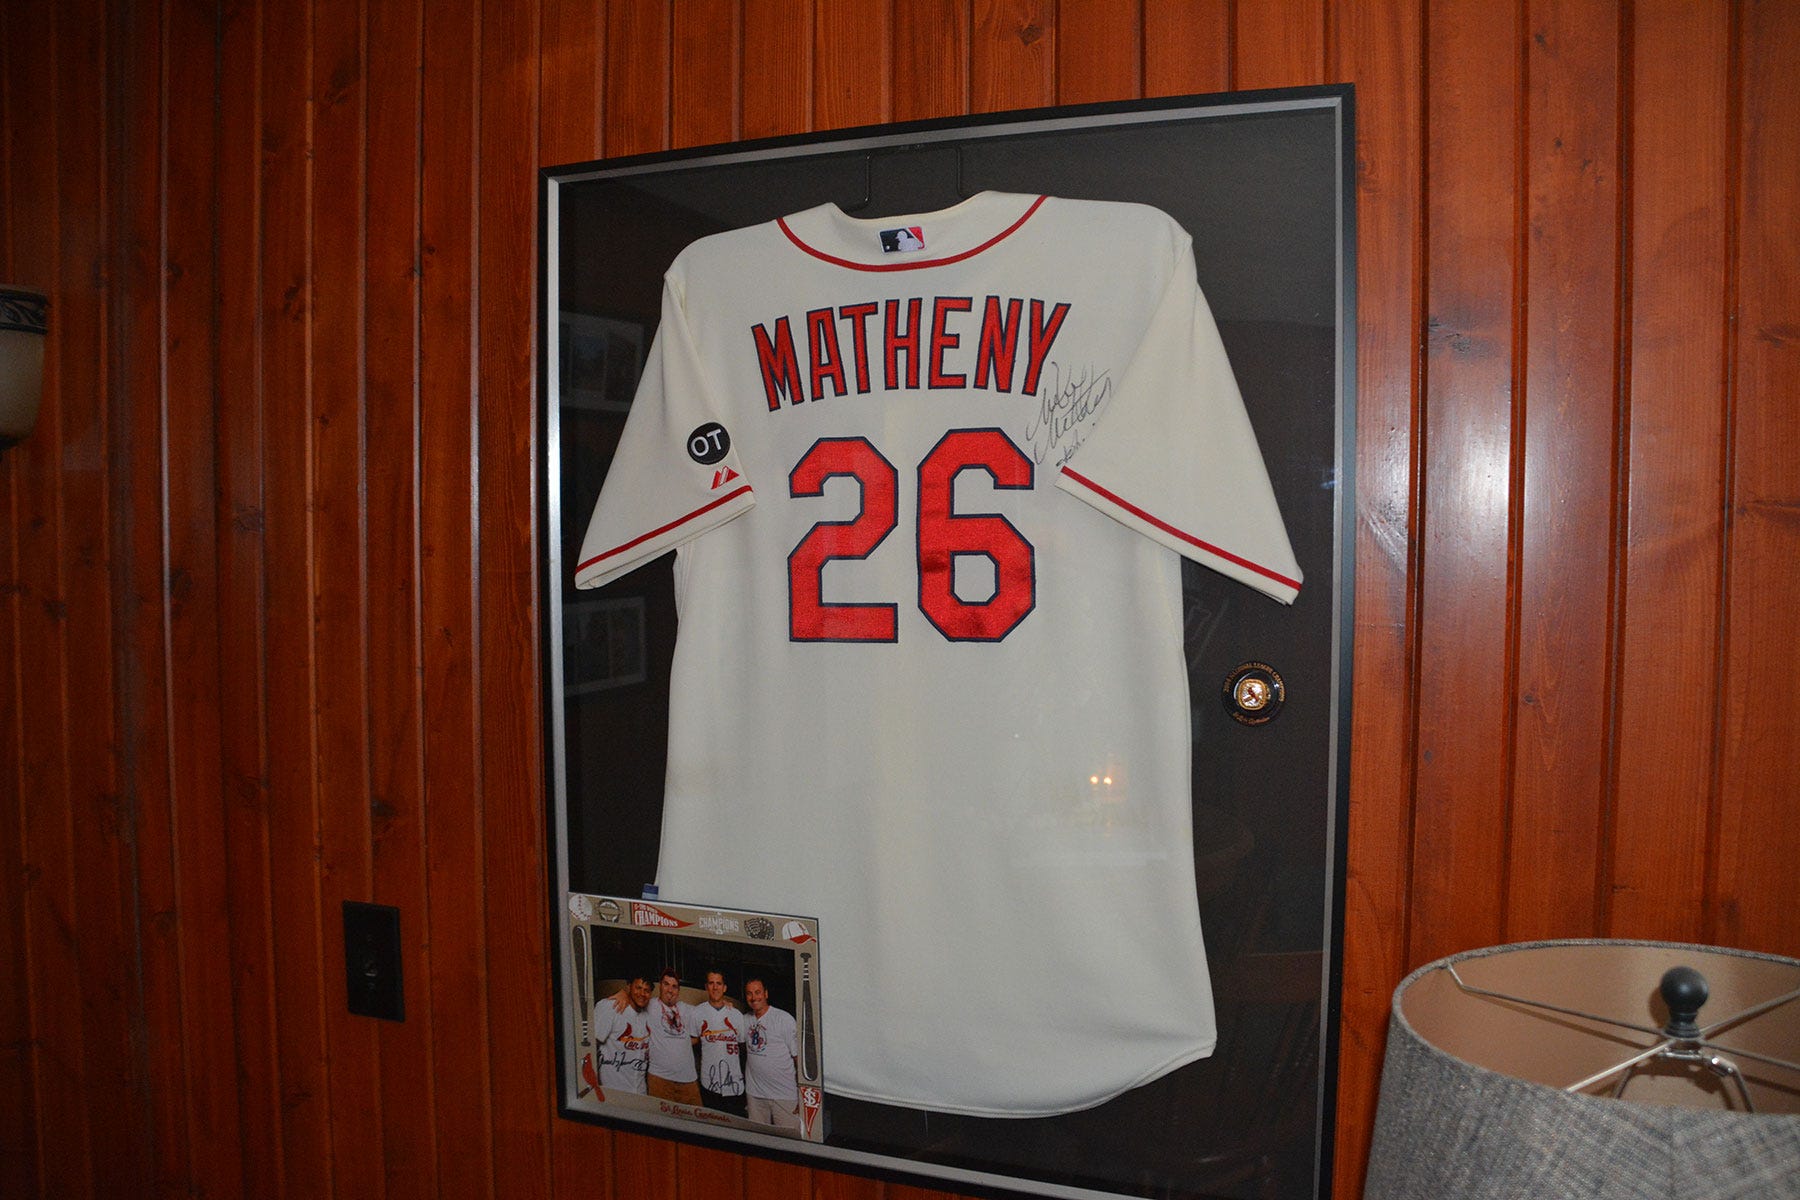 A framed Mike Matheny jersey hung on a wood-paneled wall